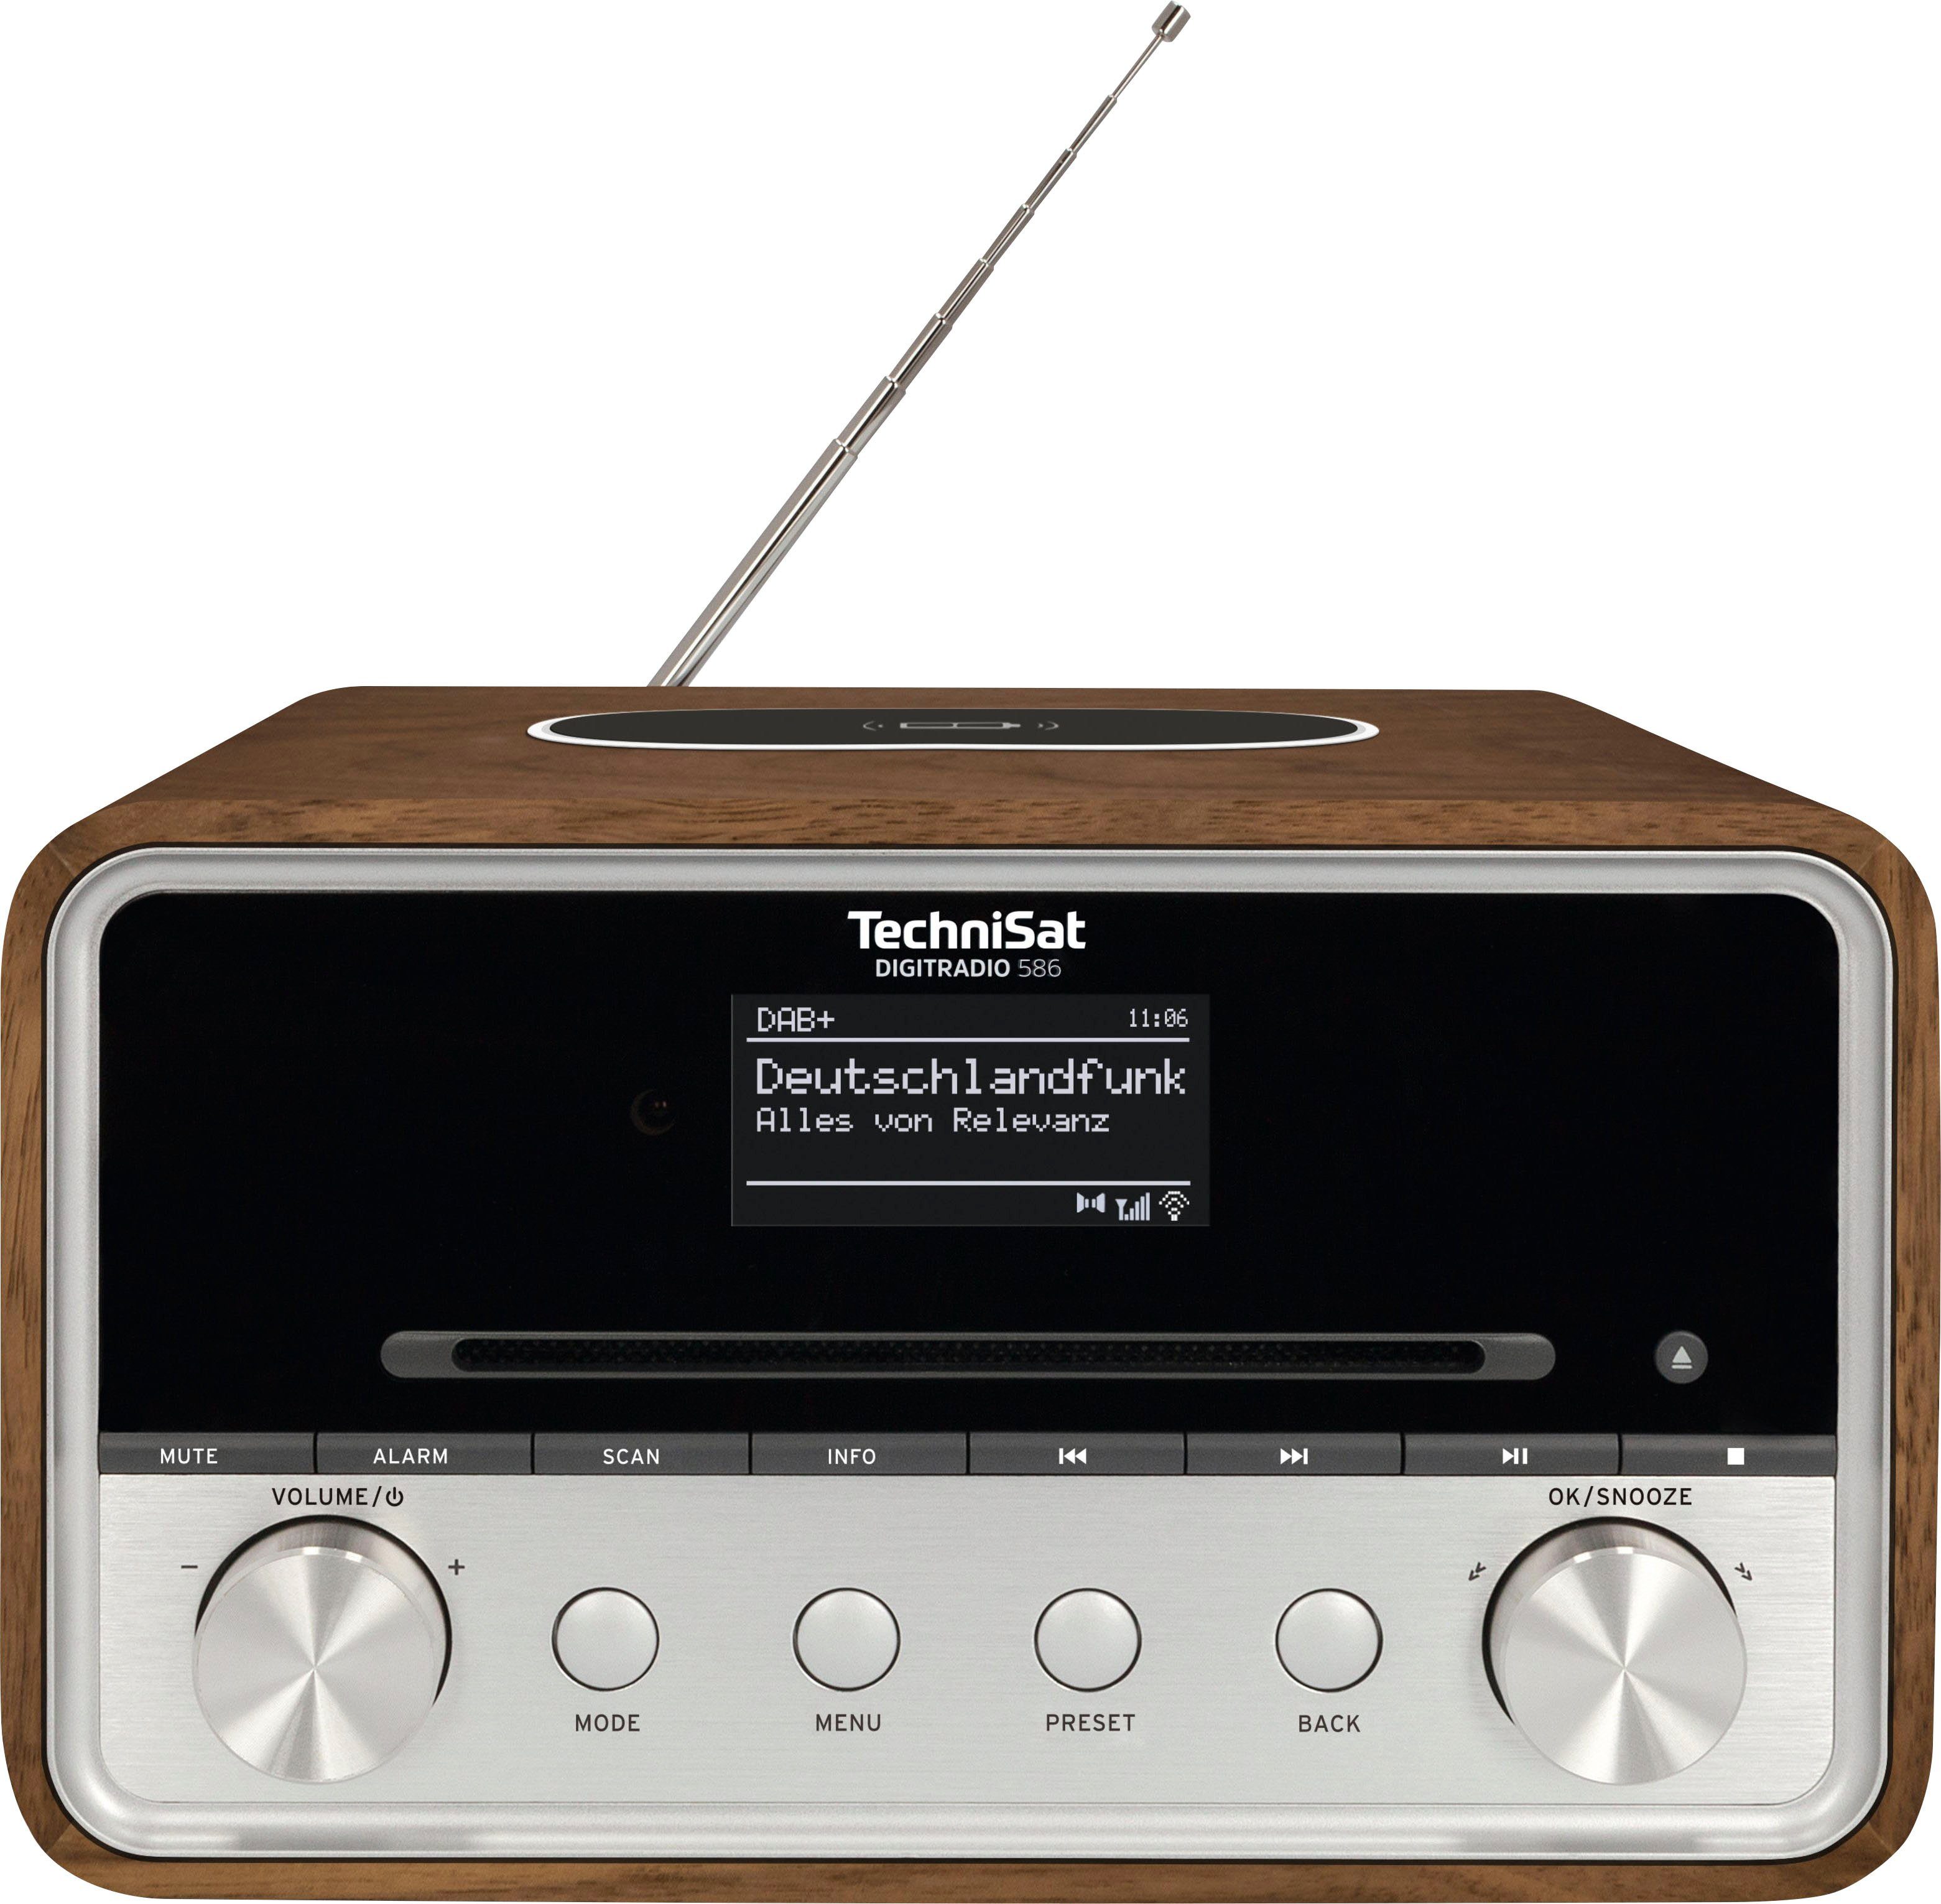 586 Internetradio, W) TechniSat (DAB), Nussbaum RDS, mit 20 DIGITRADIO UKW Radio (Digitalradio